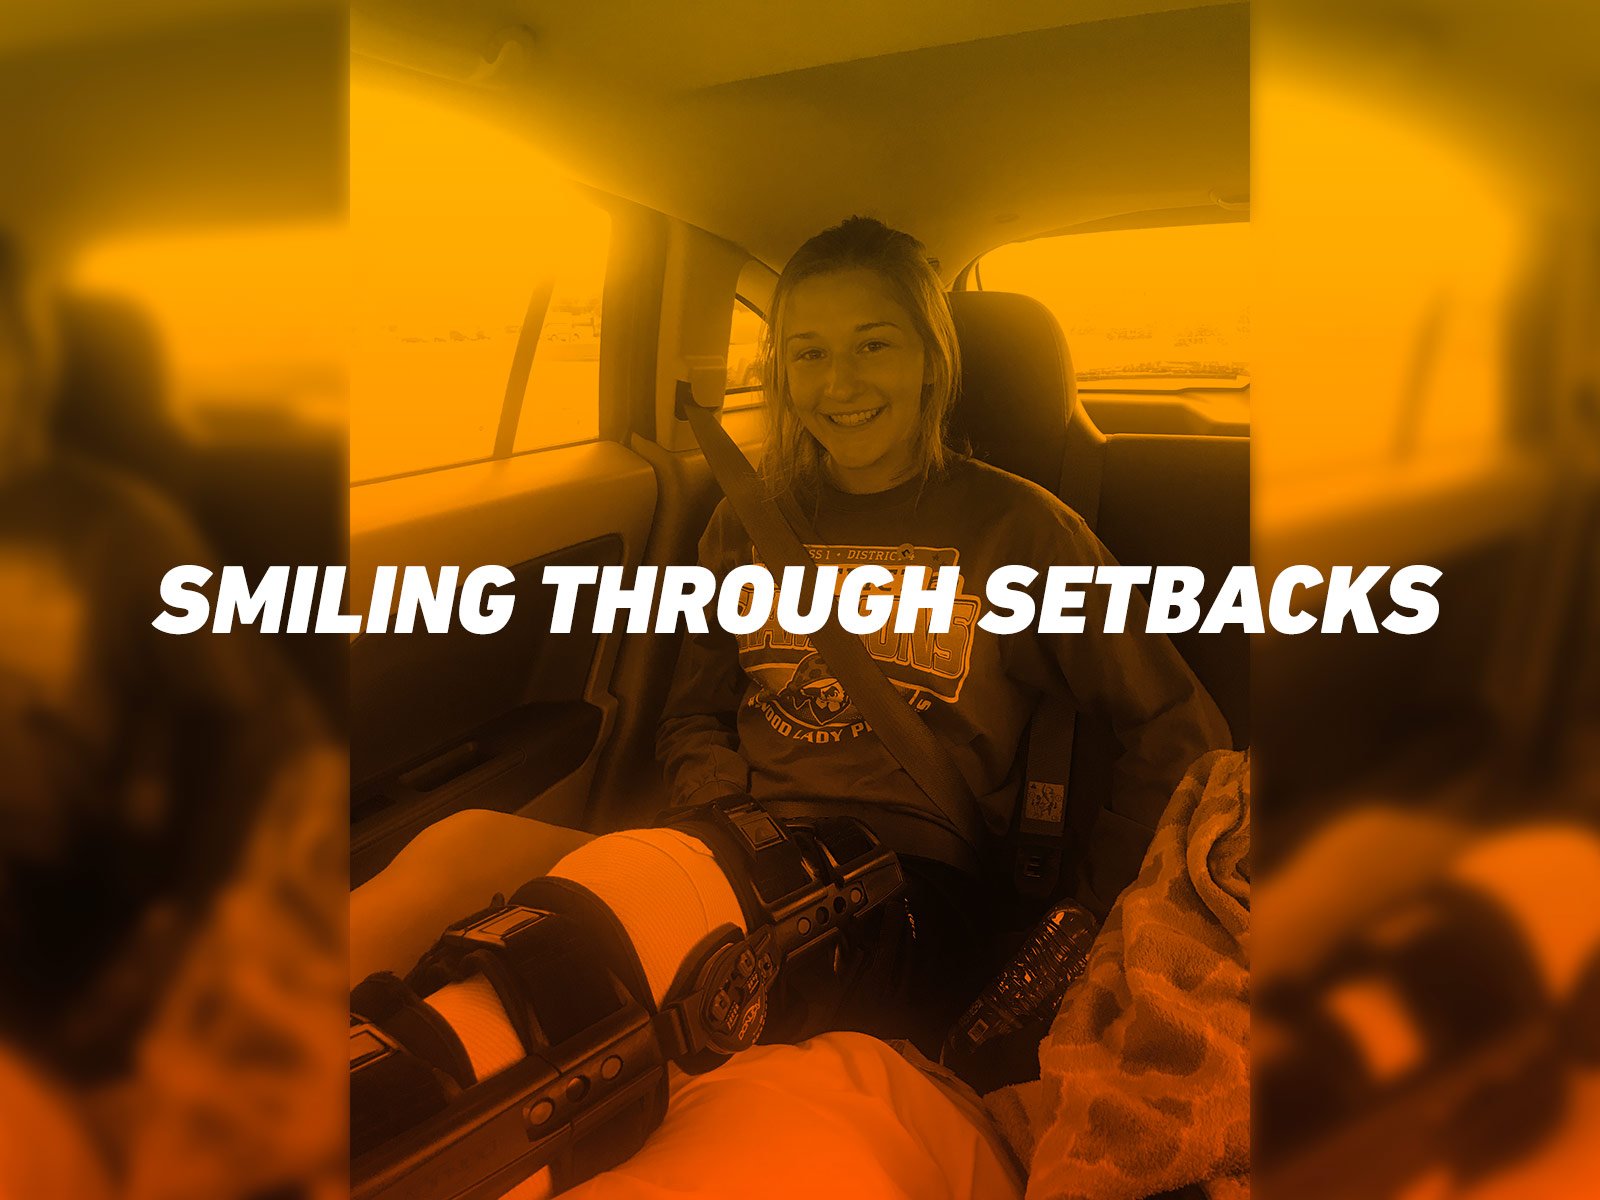 Smiling through setbacks